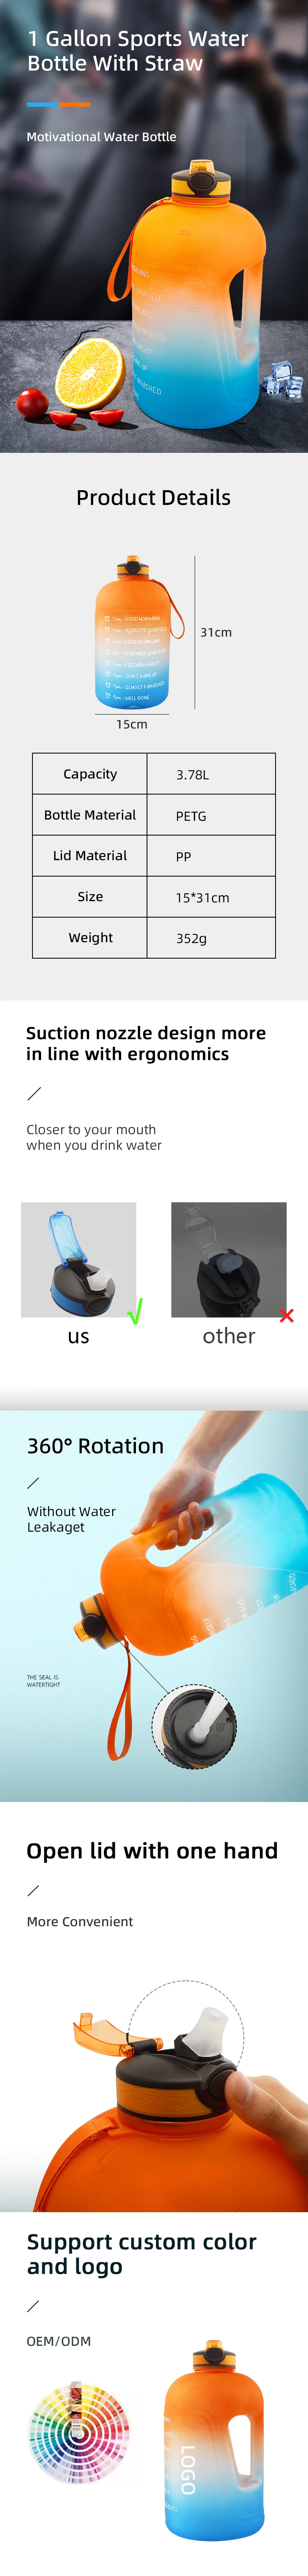 Water Bottle with Straw & Time Marker 1 Gallon BPA Free Sport Drinking Bottle Leak Proof Daily Water Intake Bottle Click Pop Up